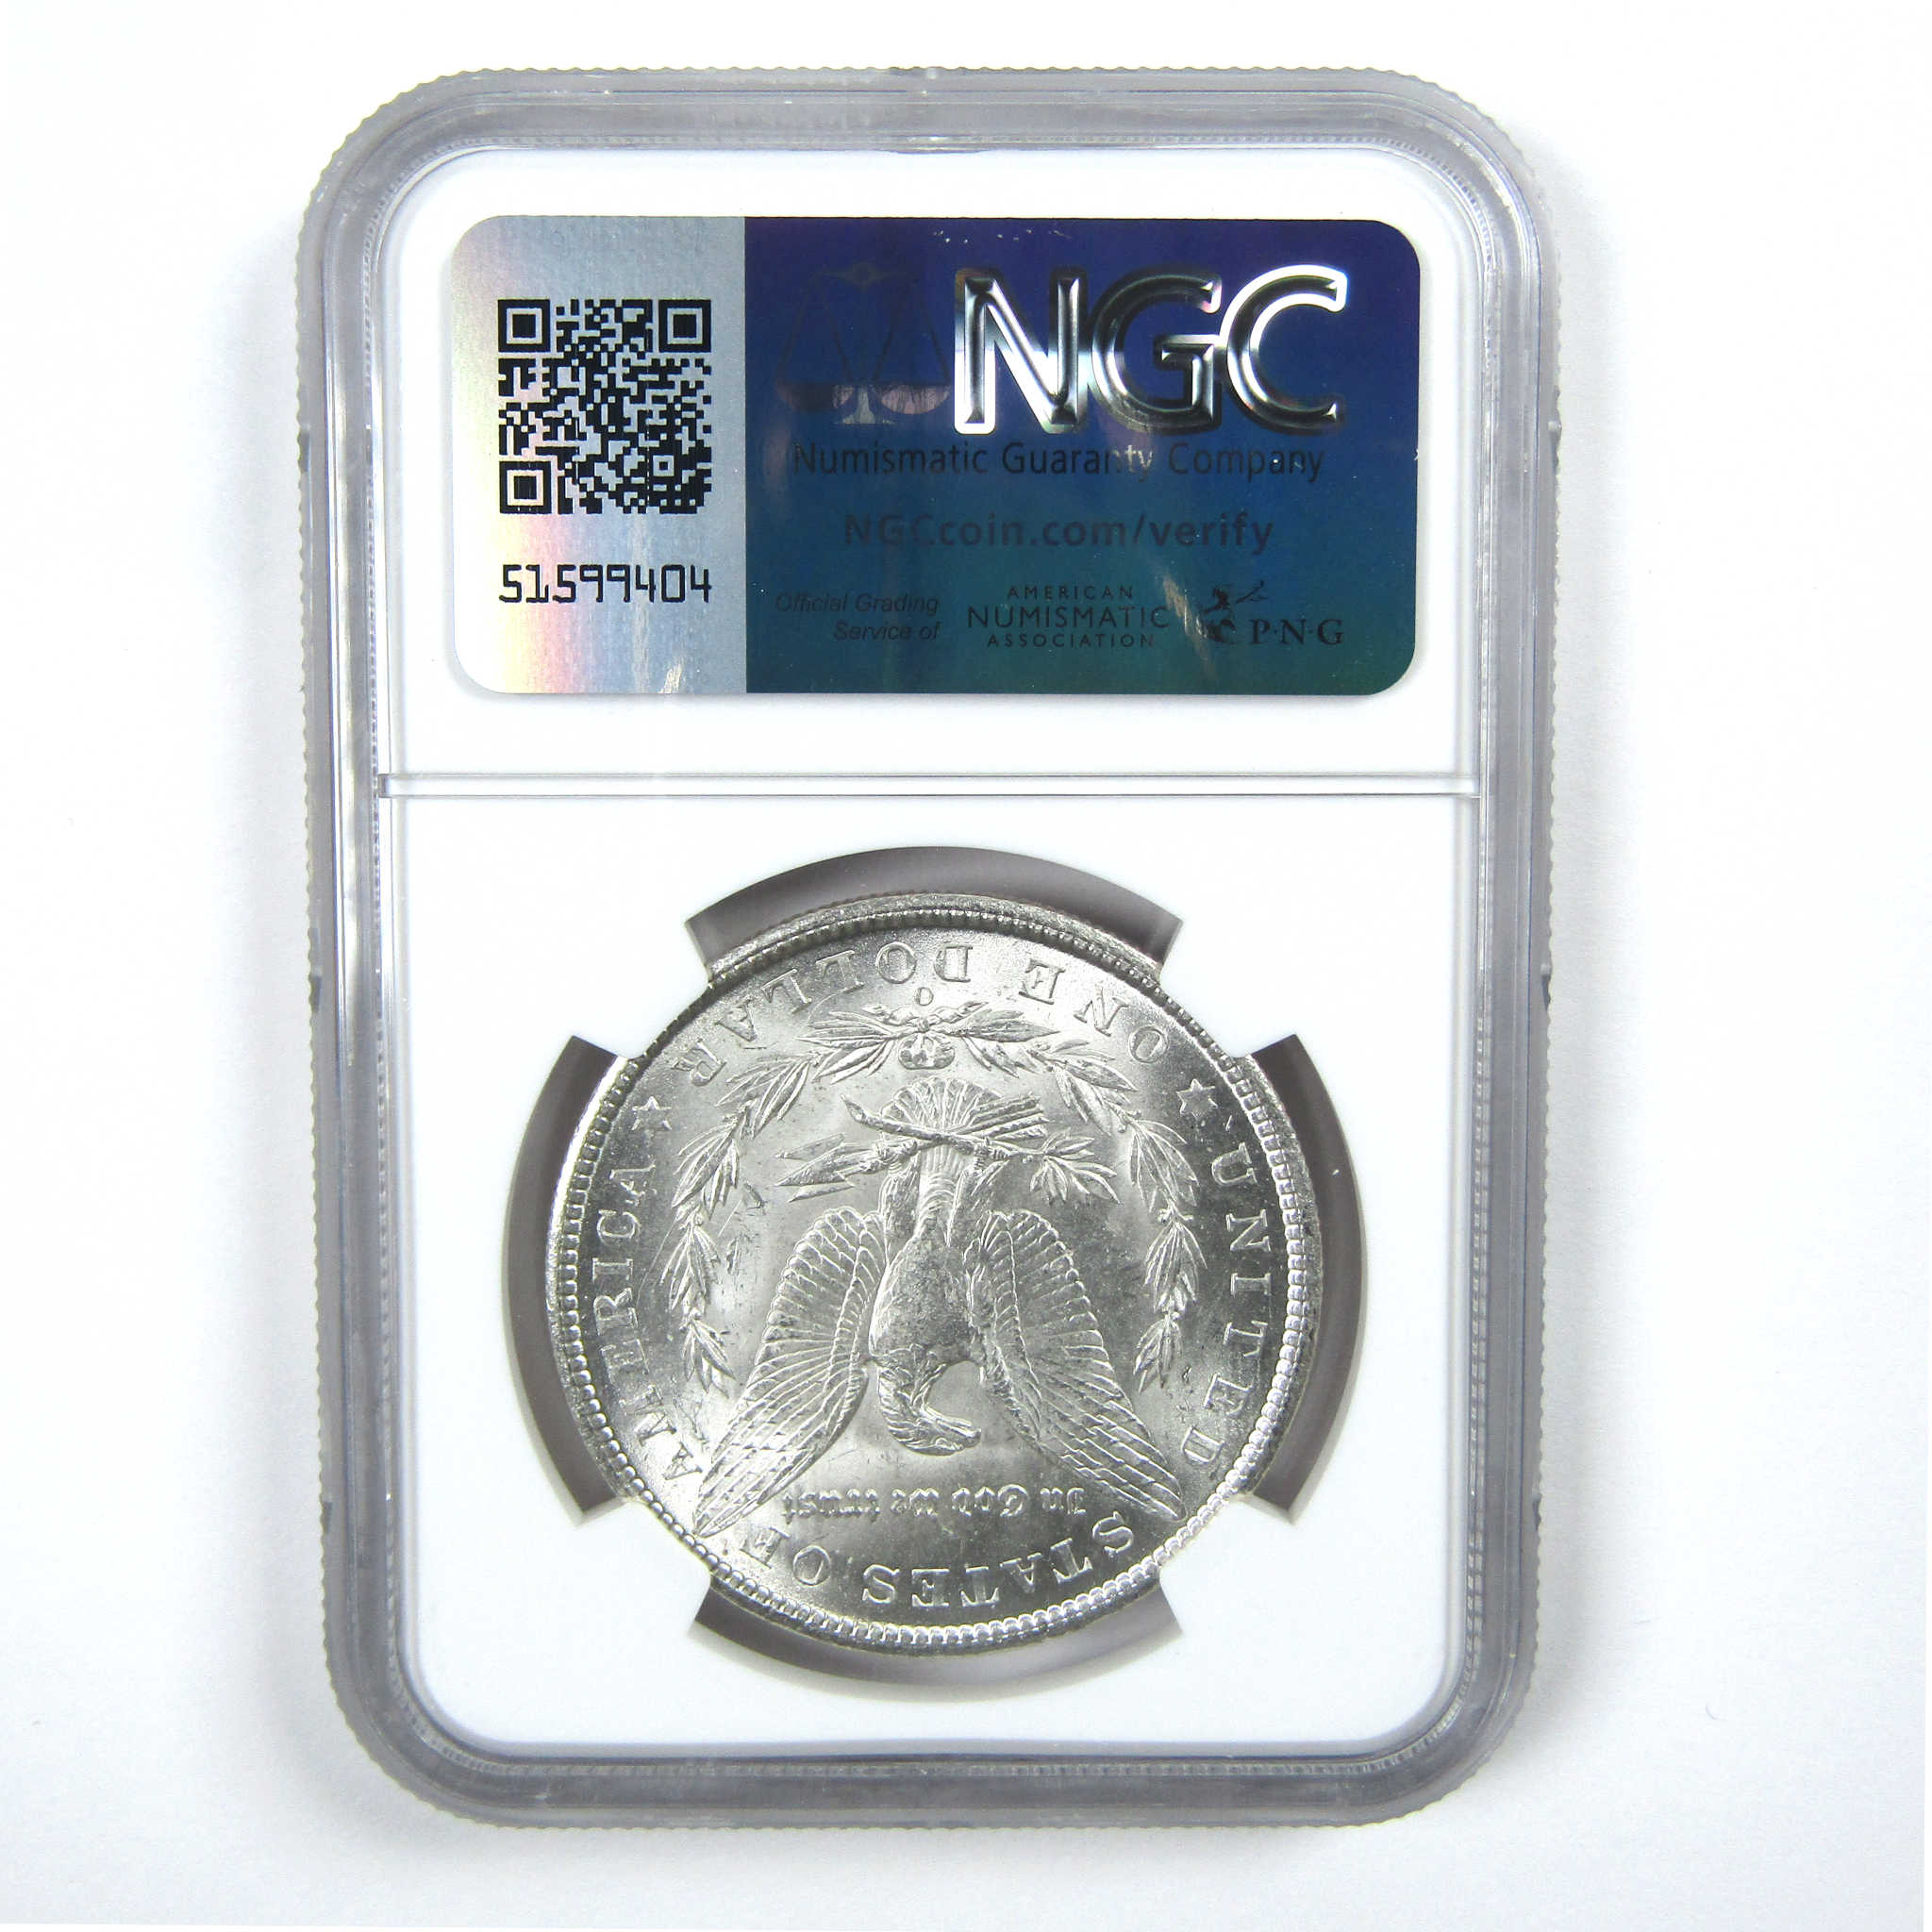 1902 O Morgan Dollar MS 63 NGC Silver $1 Uncirculated Coin SKU:I13773 - Morgan coin - Morgan silver dollar - Morgan silver dollar for sale - Profile Coins &amp; Collectibles